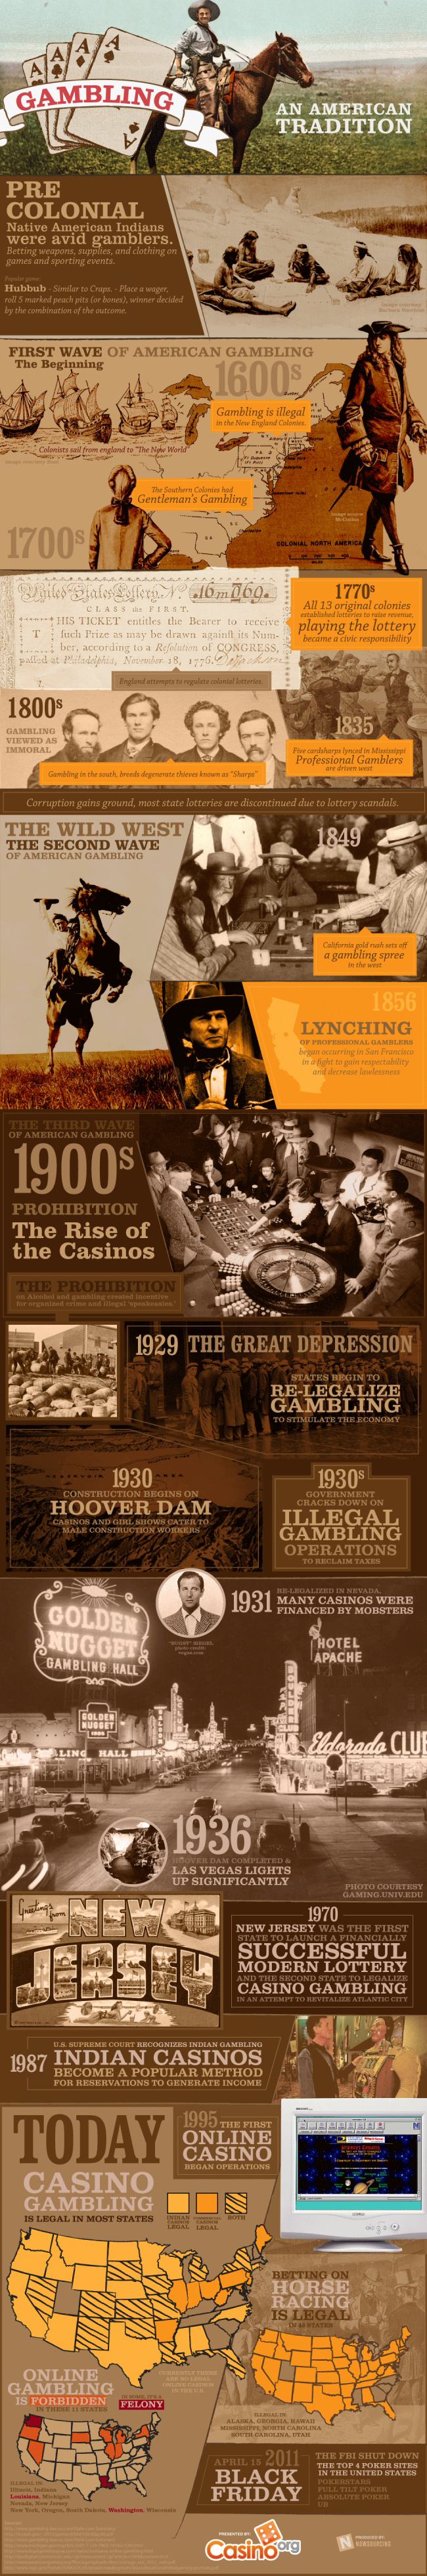 American Gambling - A History